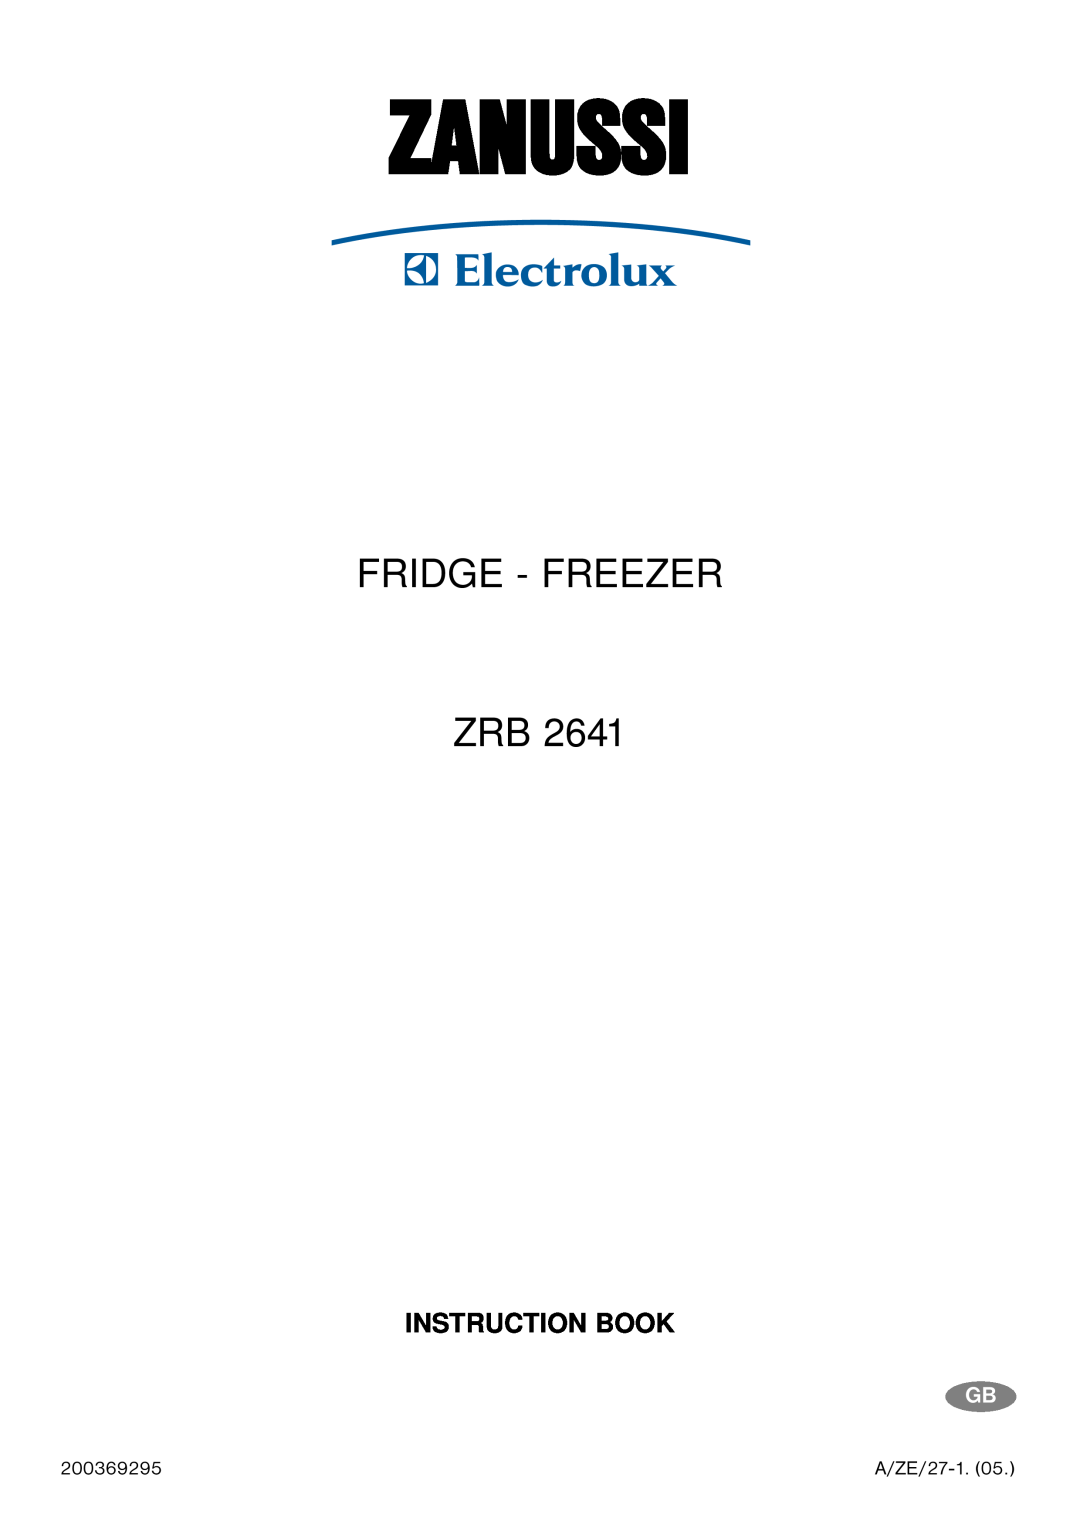 Zanussi ZRB 2641 manual Instruction Book, Zanussi, Fridge - Freezer Zrb 